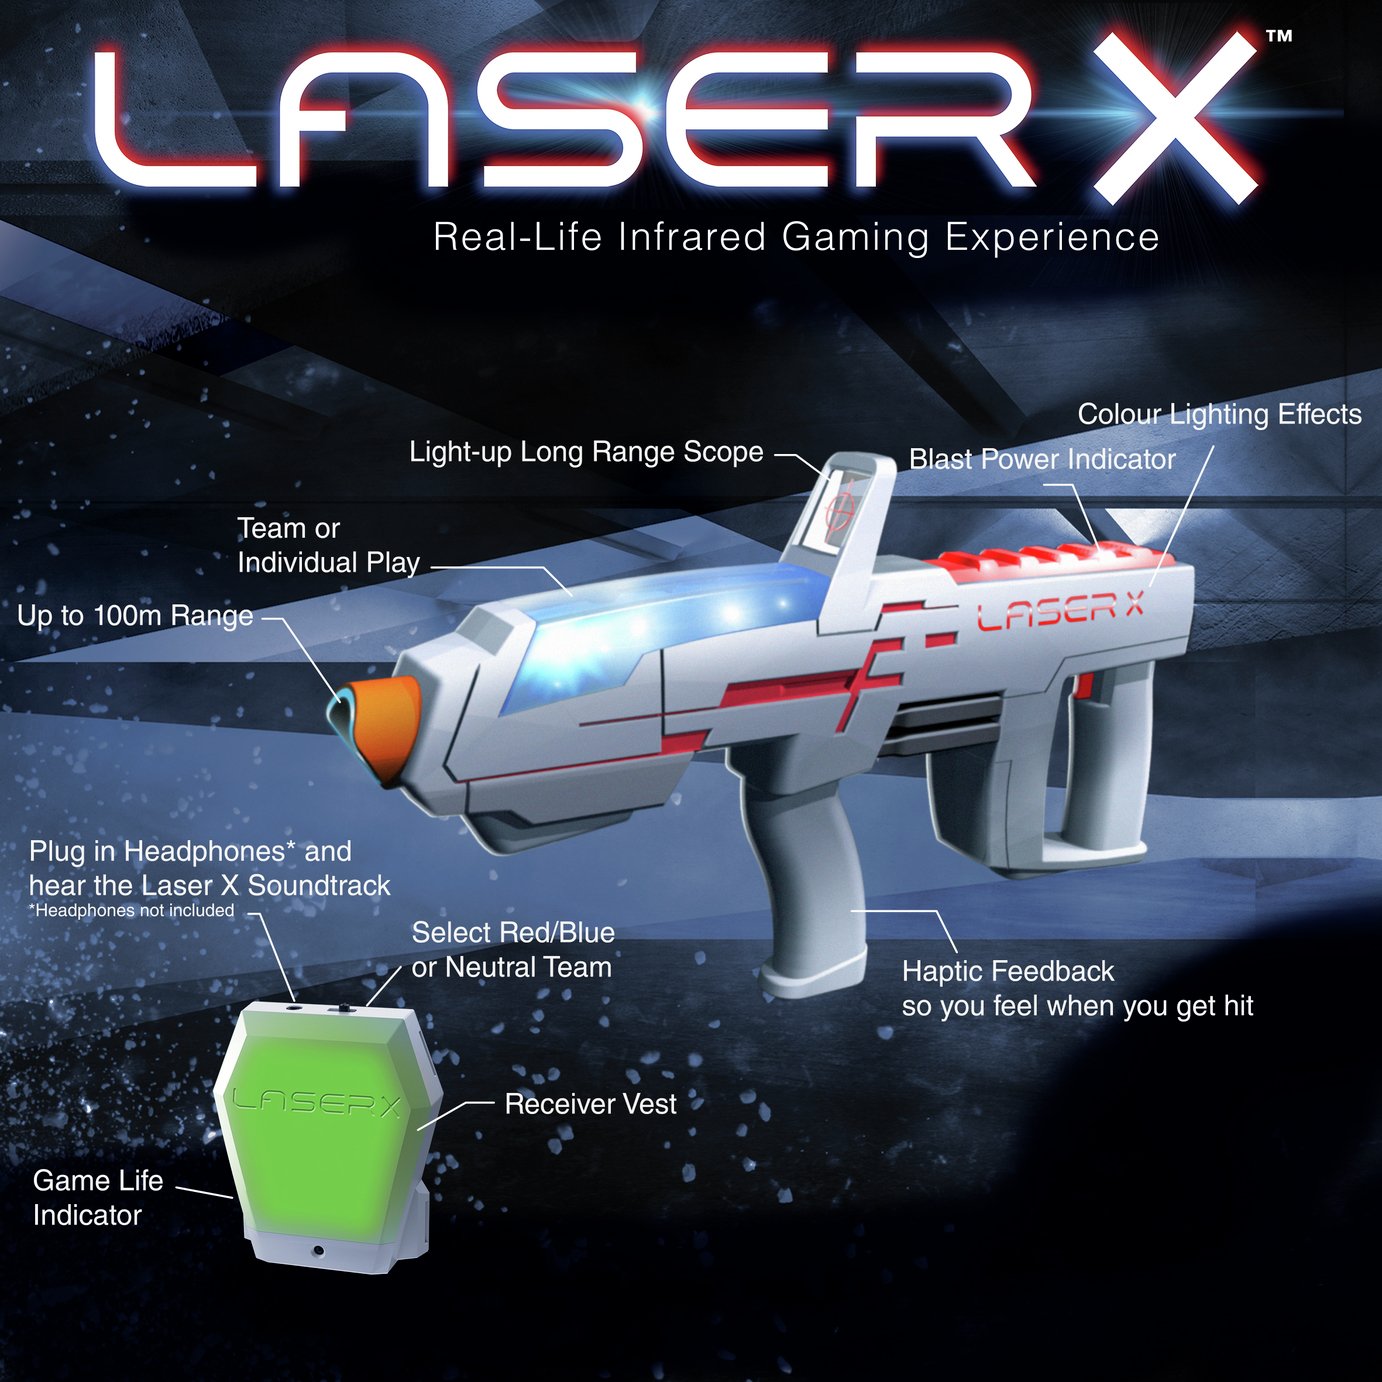 Laser X Long Range Blaster Review